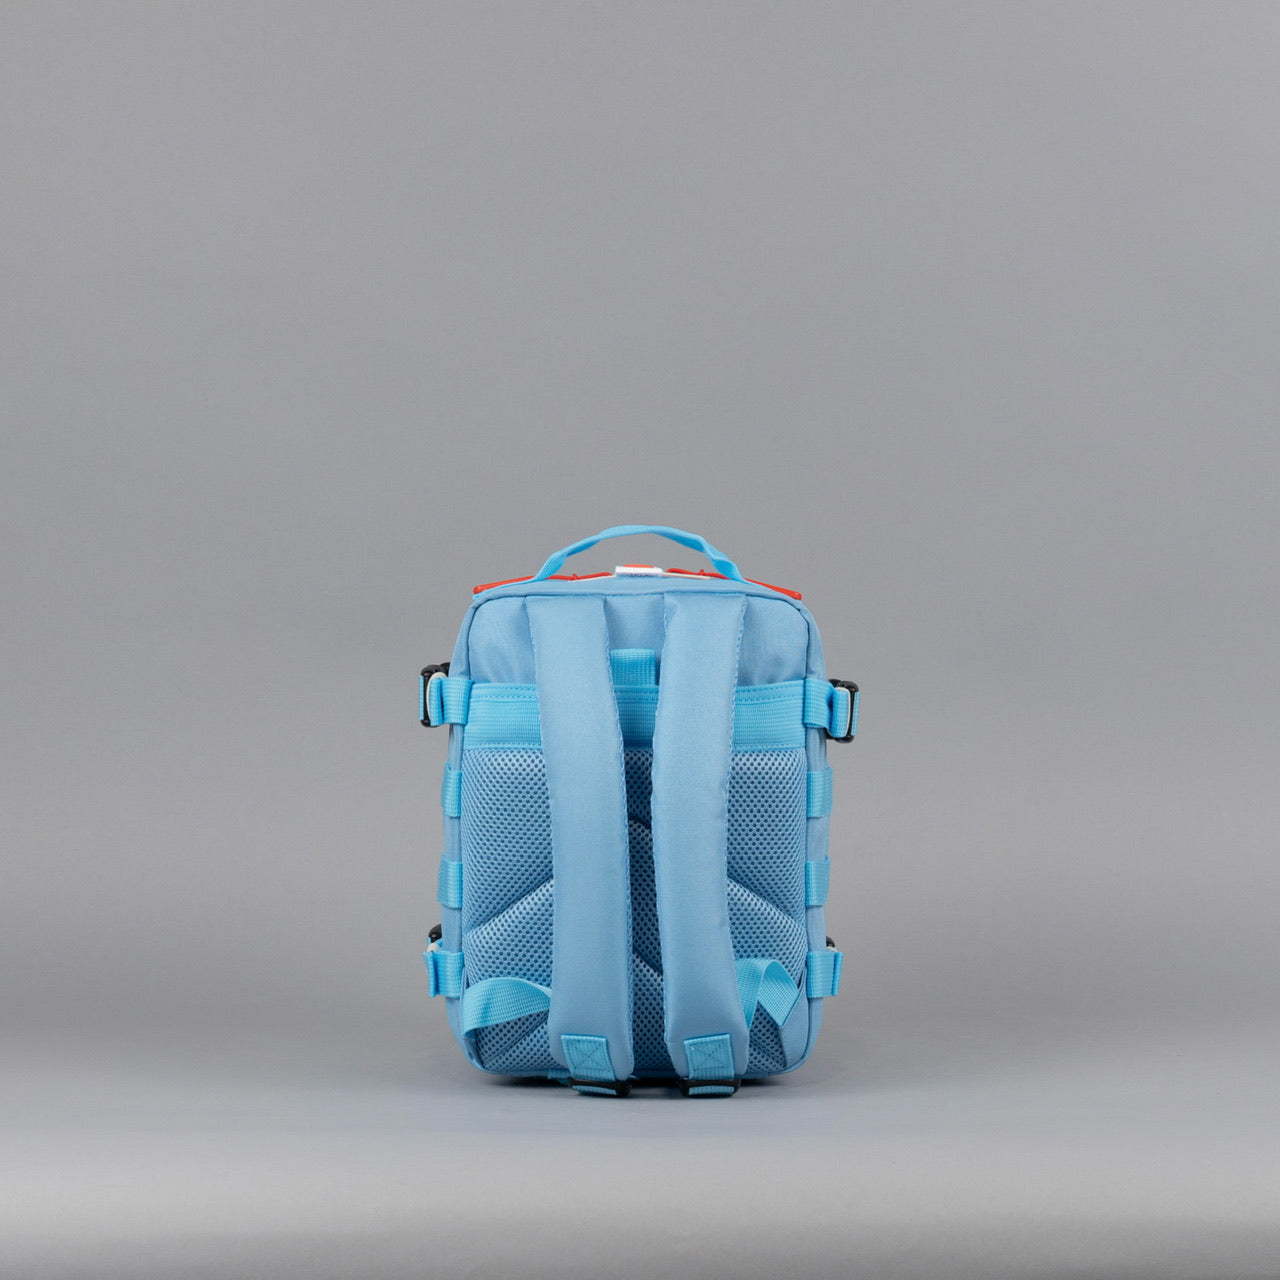 9L Backpack Mini West Coast Classic